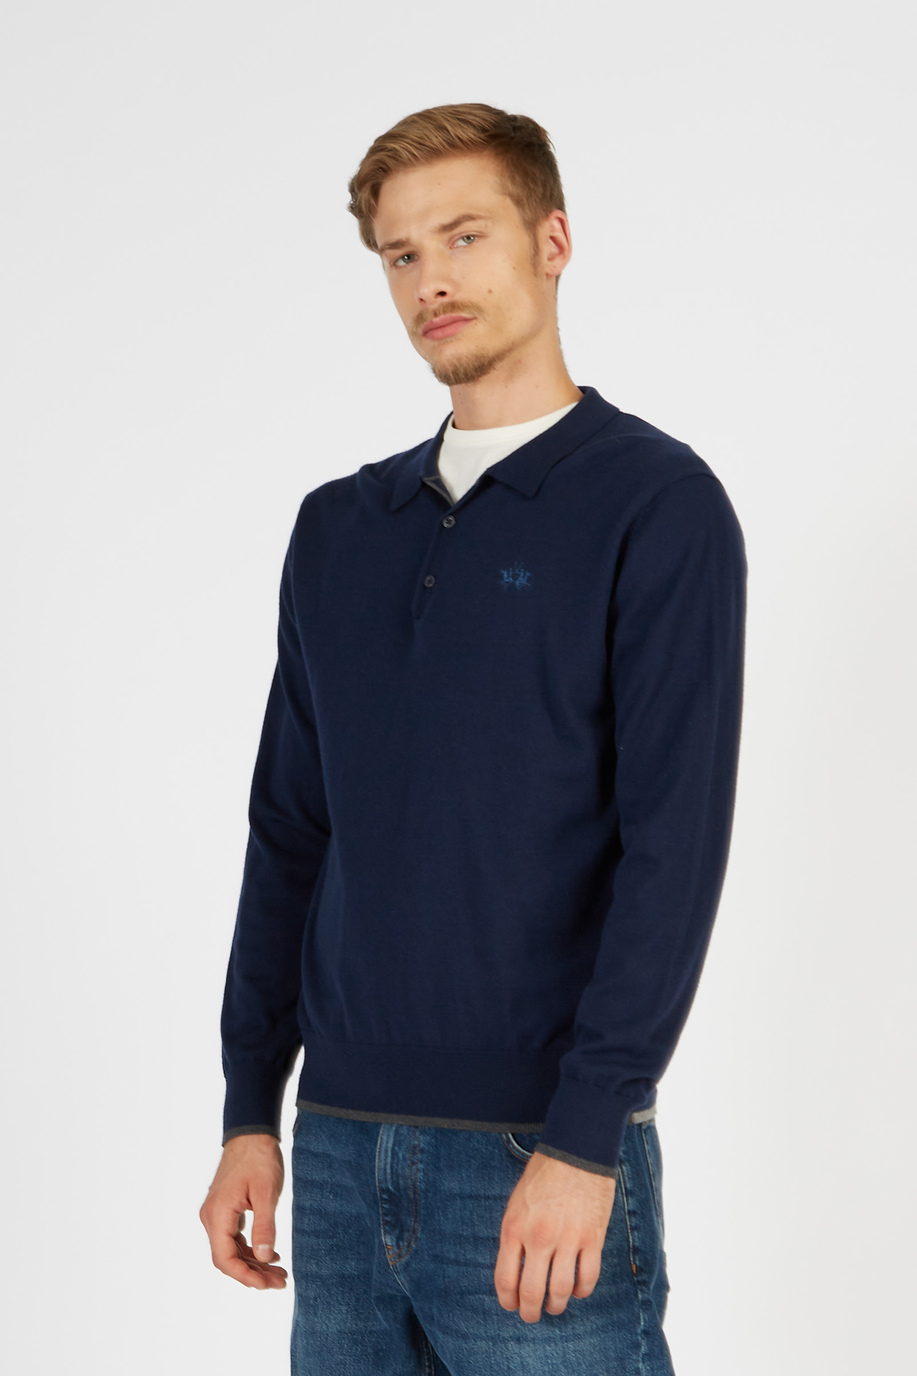 Men’s Blue Ribbon sweater in regular fit cashmere blend - Winter looks for him | La Martina - Official Online Shop